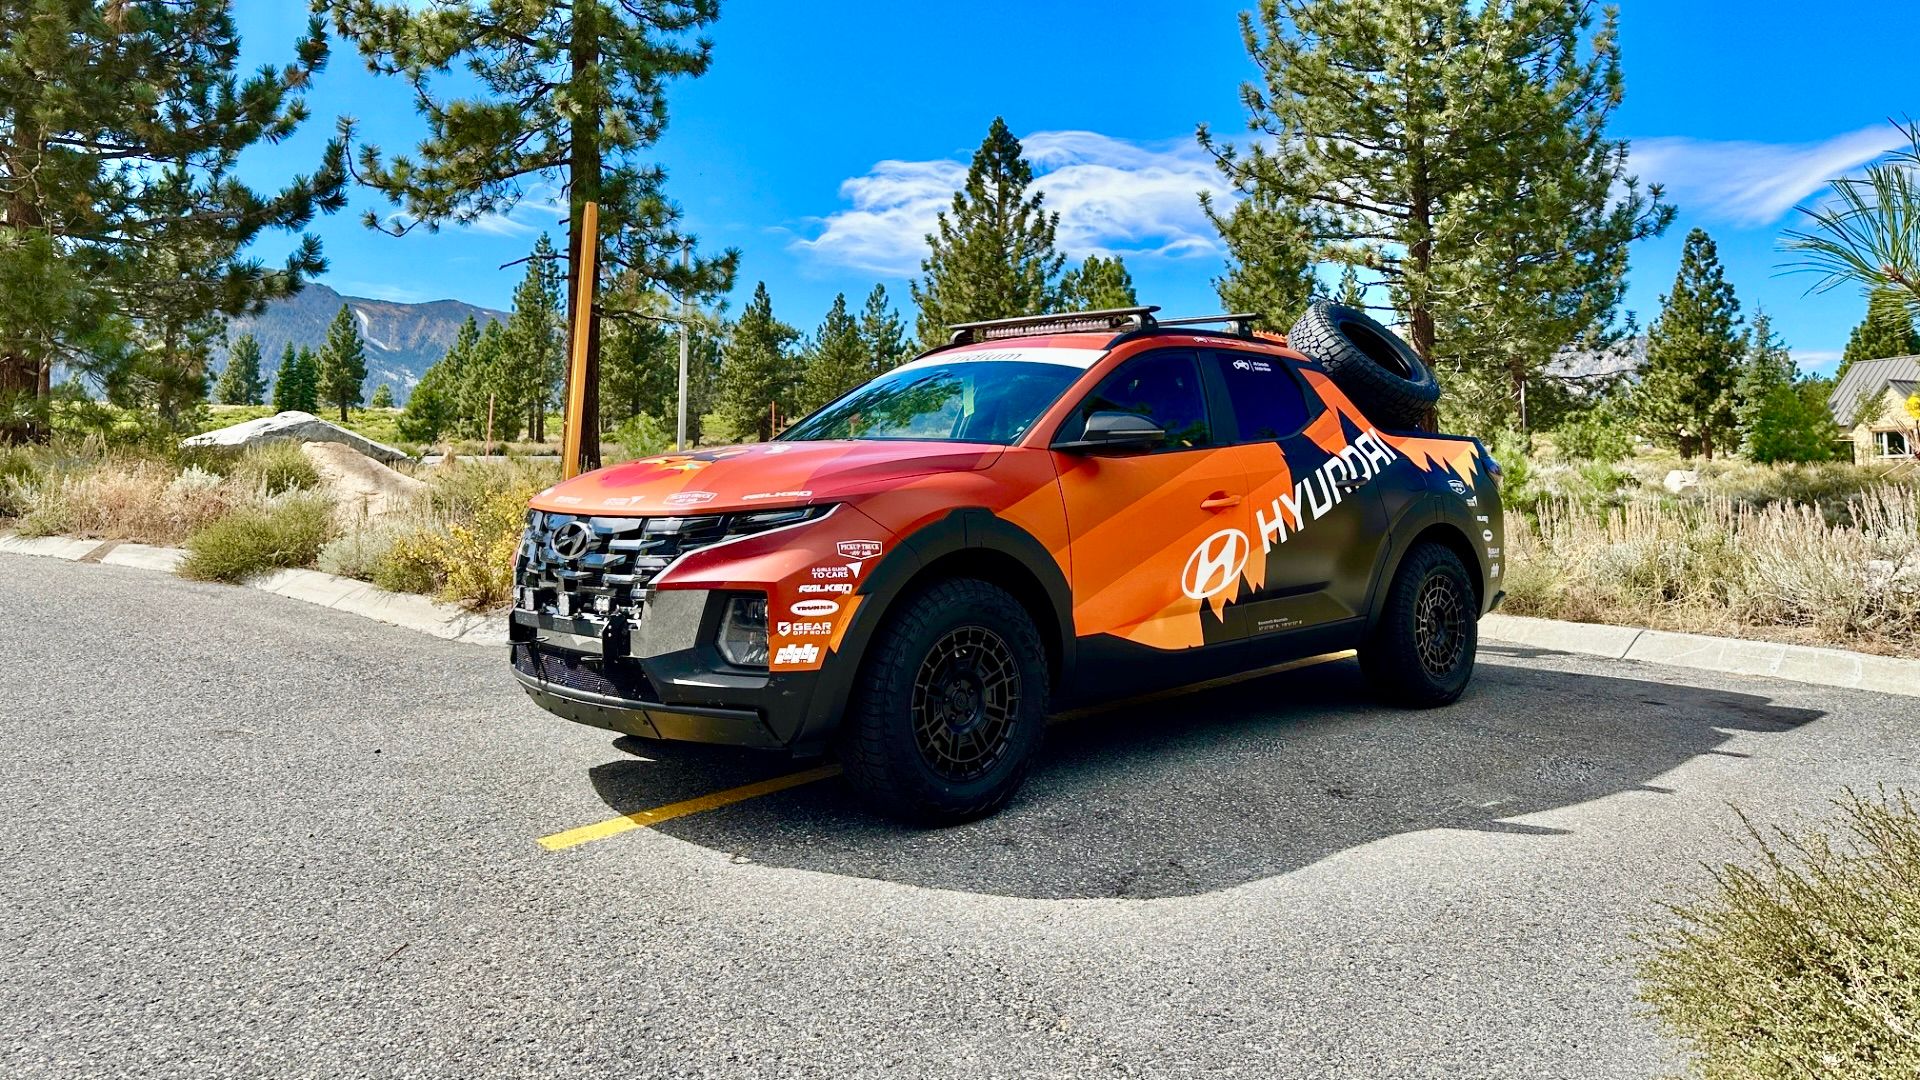 Team Brute Squad's off-road-ready Hyundai Santa Cruz shows off its custom wrap as the team prepares for the 2023 Rebelle Rally